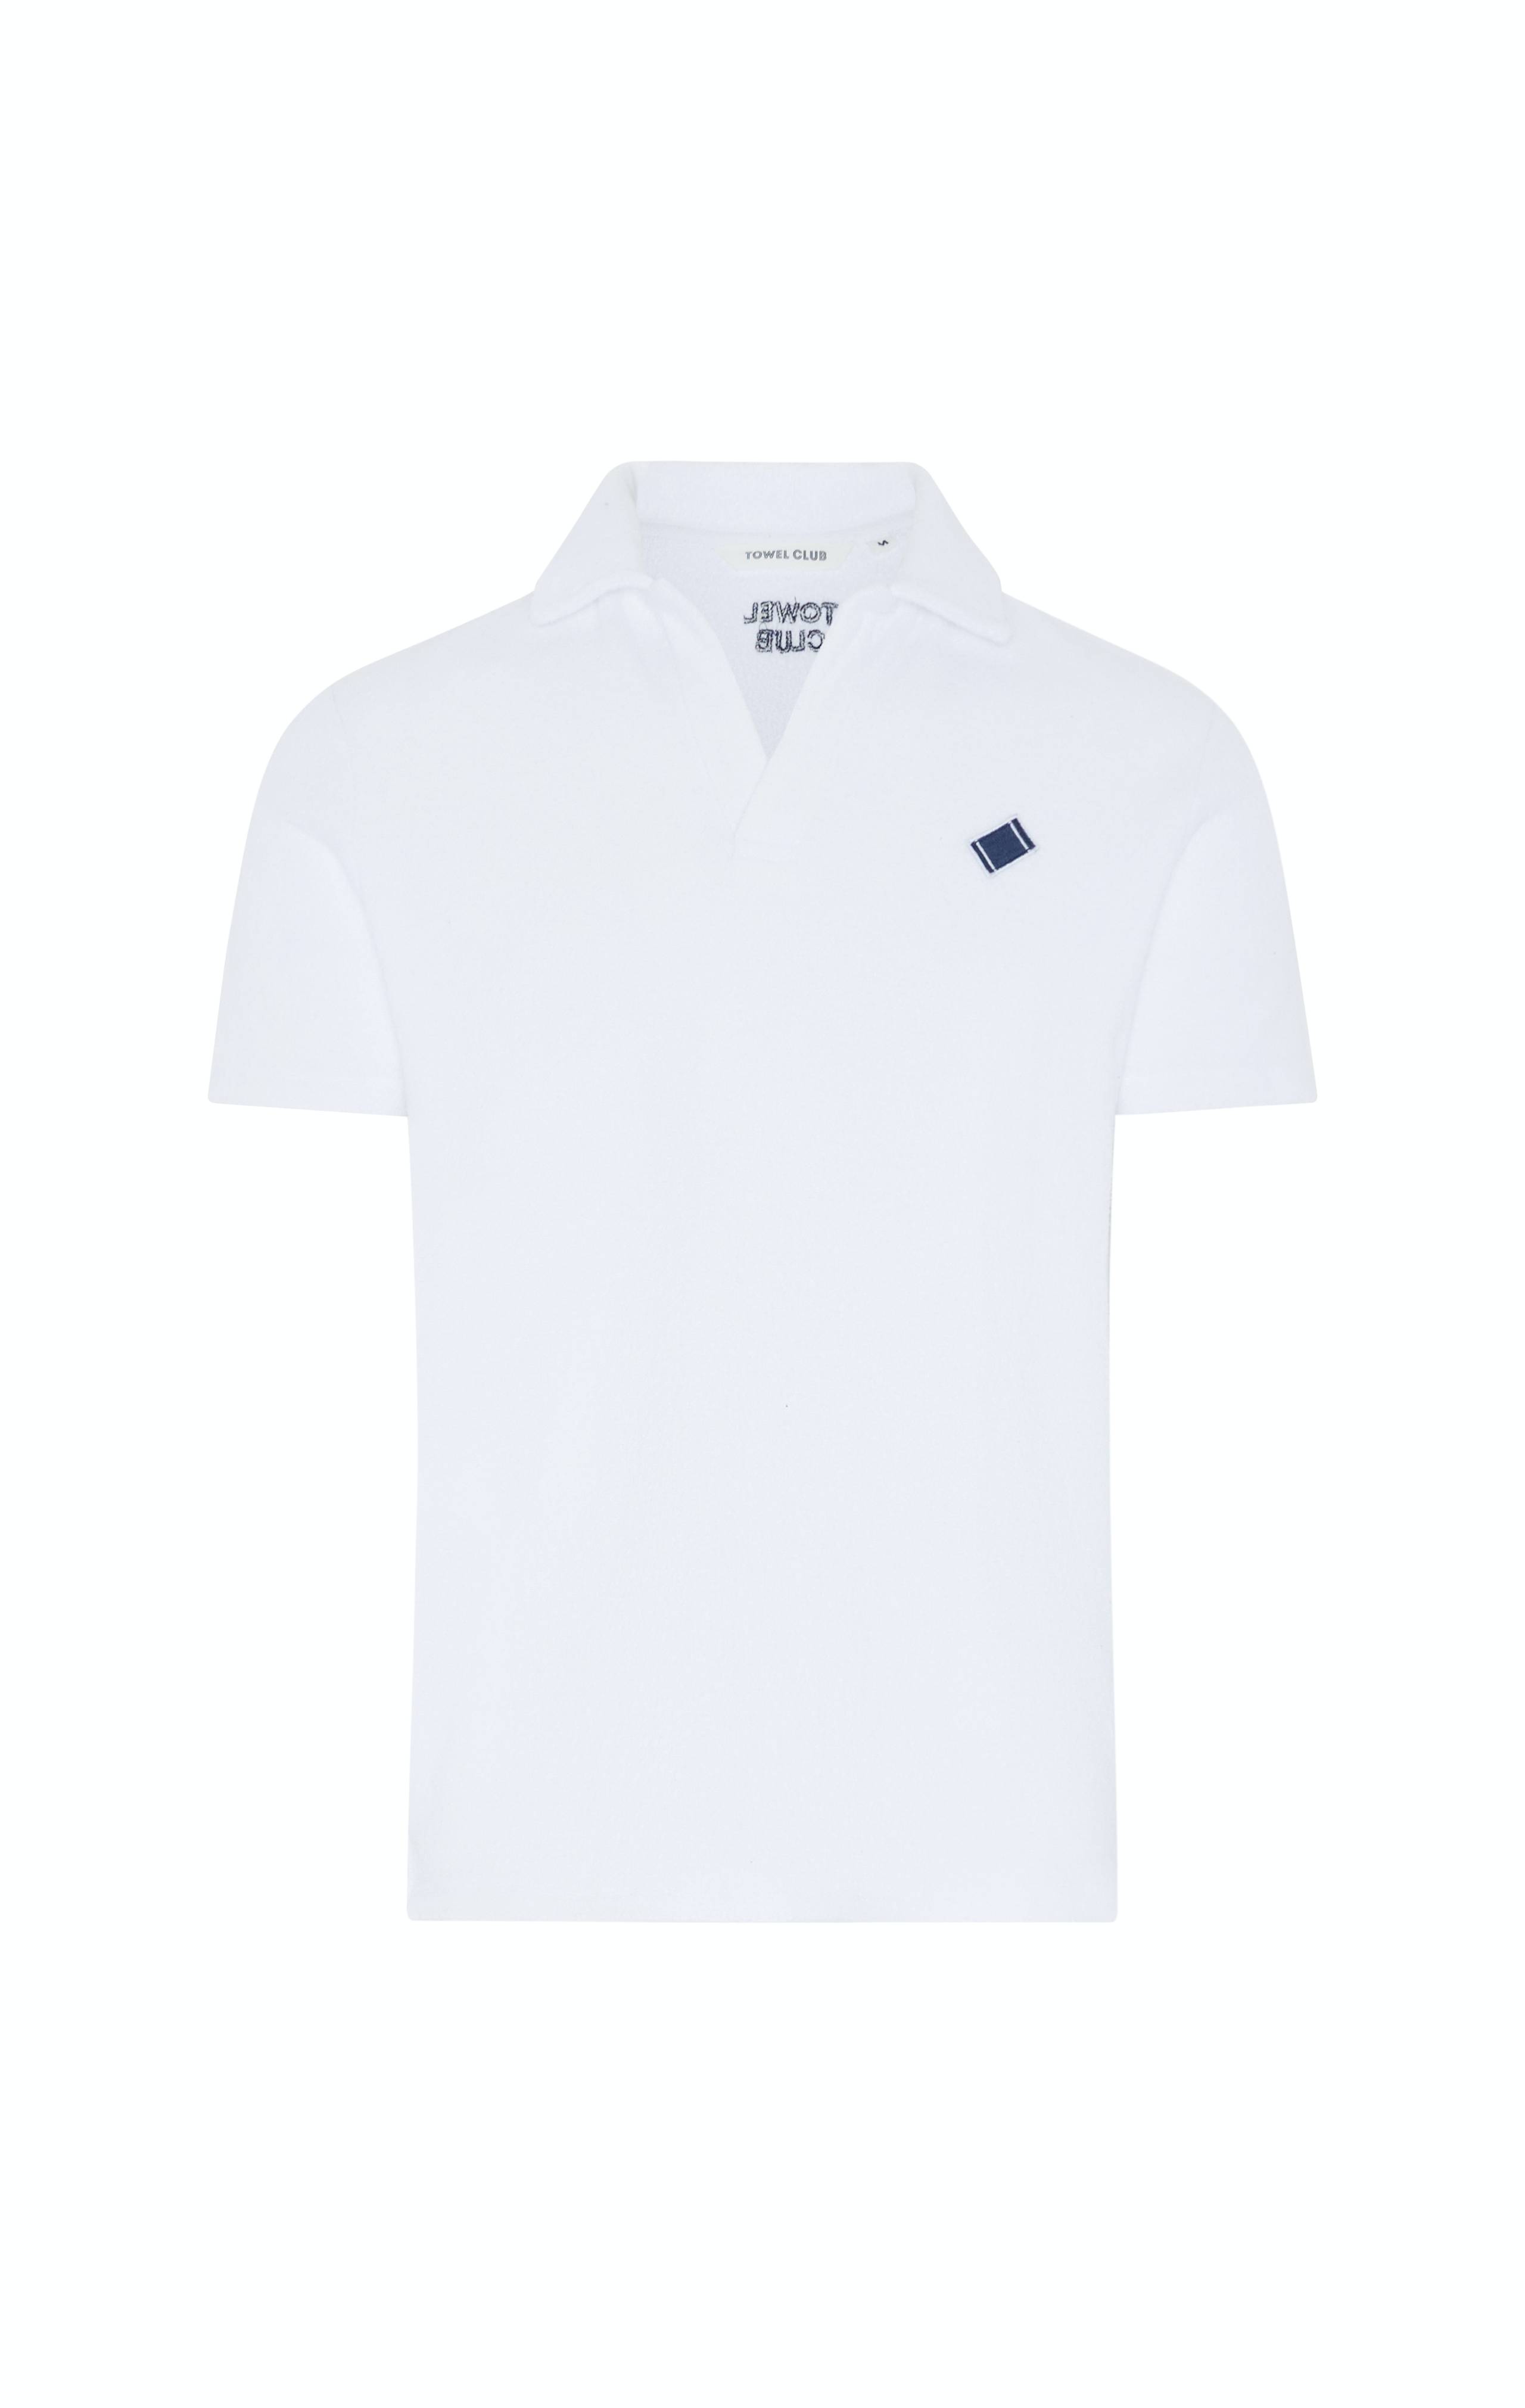 Onepiece Towel Club Piquet Shirt White - 2